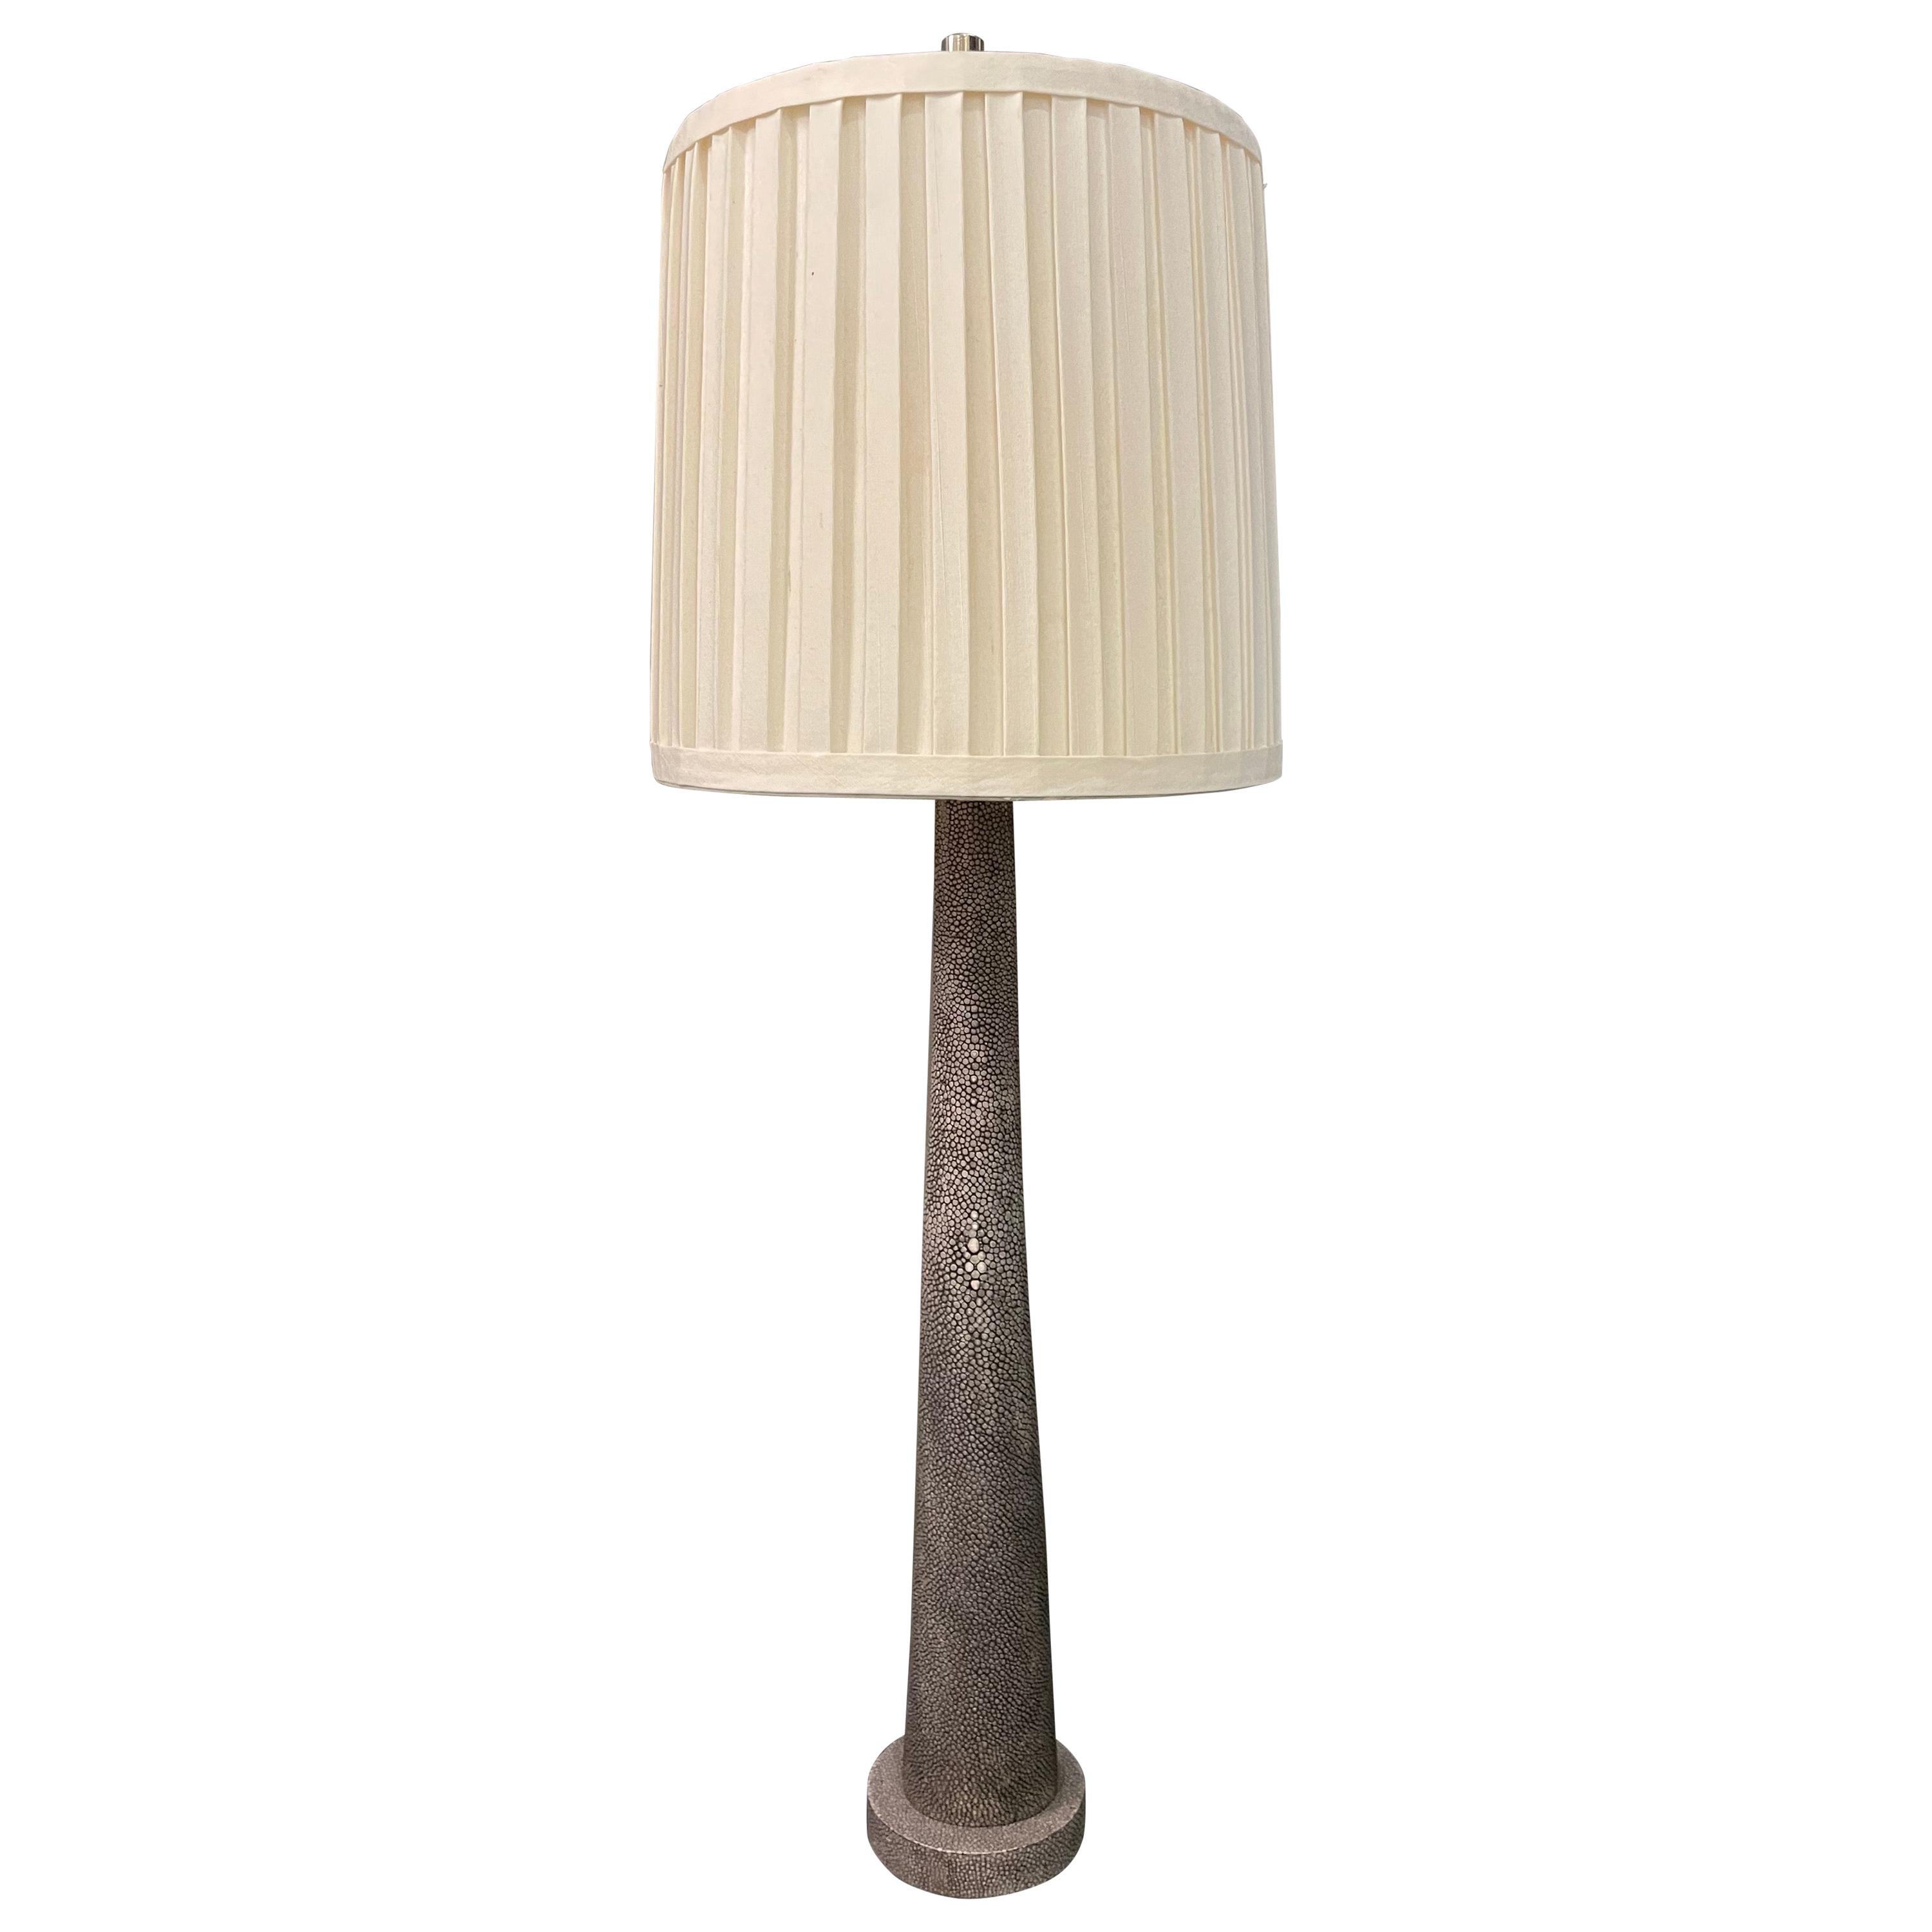 Shagreen Clad Organic Table Lamp